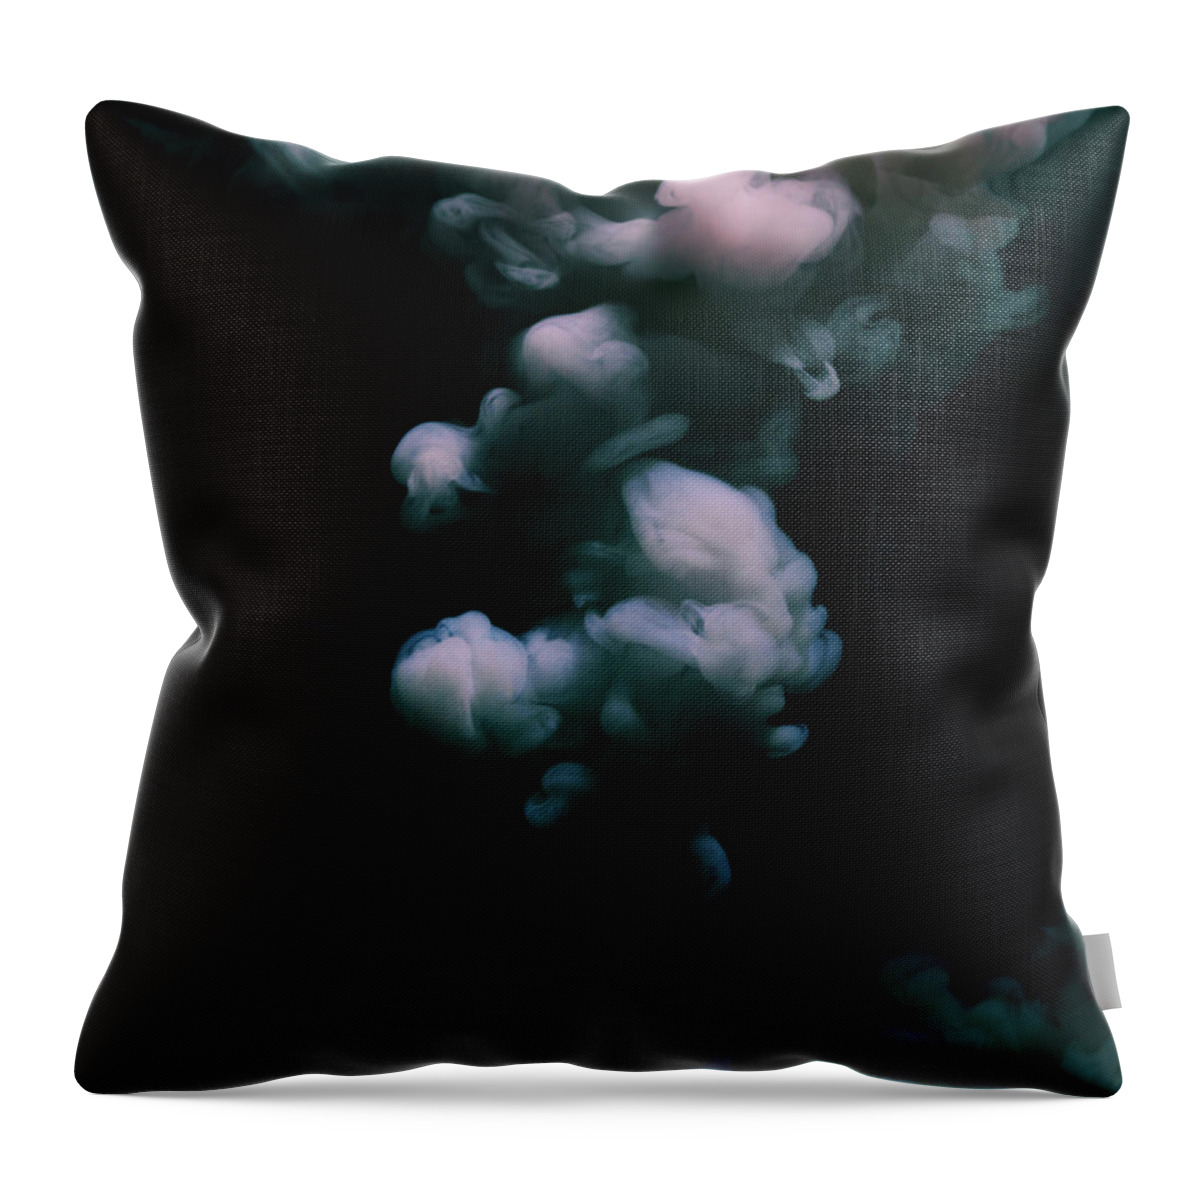 Black Background Throw Pillow featuring the photograph Smoke #21 by Henrik Sorensen